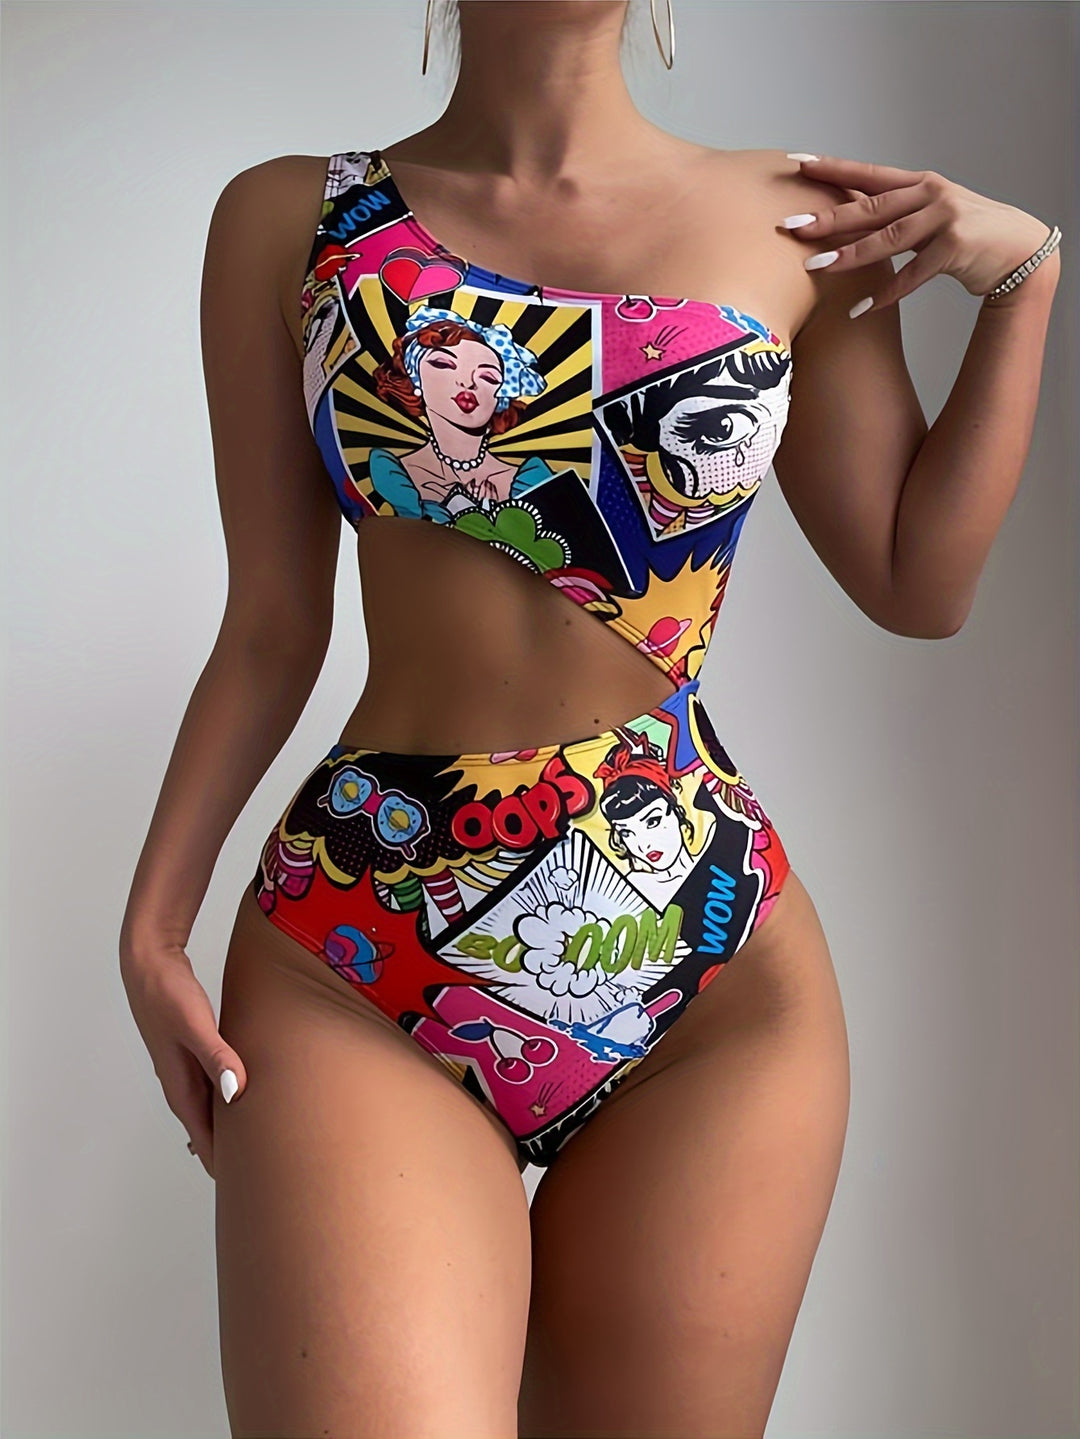 Cartoon Comic Figure Print Cut Out Pop Art One-piece Swimsuit, One Shoulder Asymmetric High Stretch Unique Bathing Suits, Women's Swimwear & Clothing FESTIVAL OUTFITS & STREETWEAR